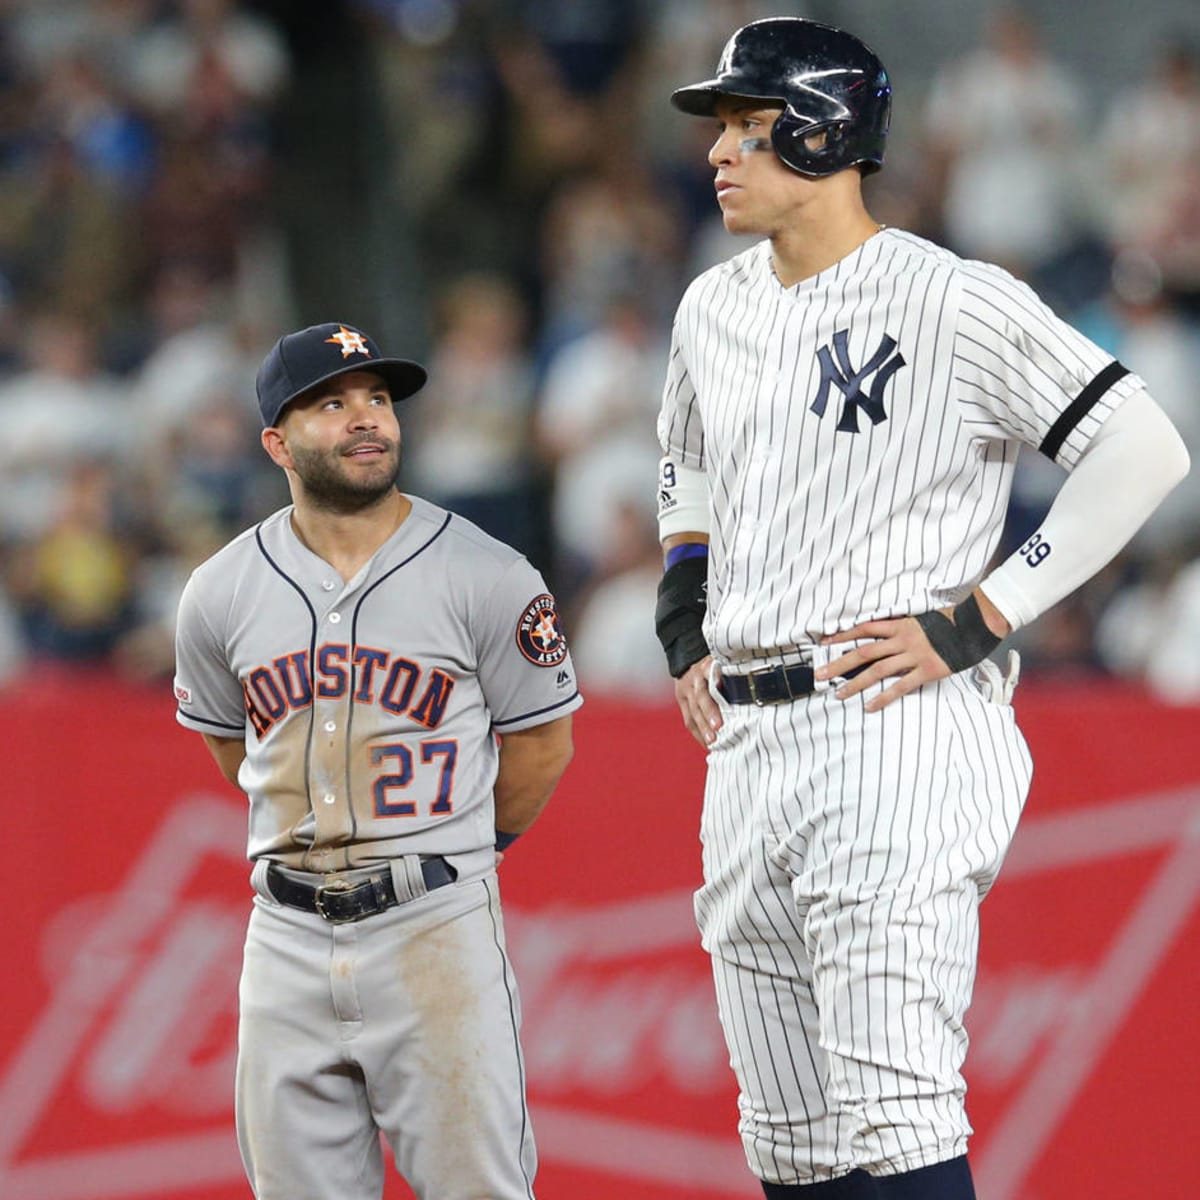 Yankees' Aaron Judge mocks Astros' Jose Altuve tugging on jersey